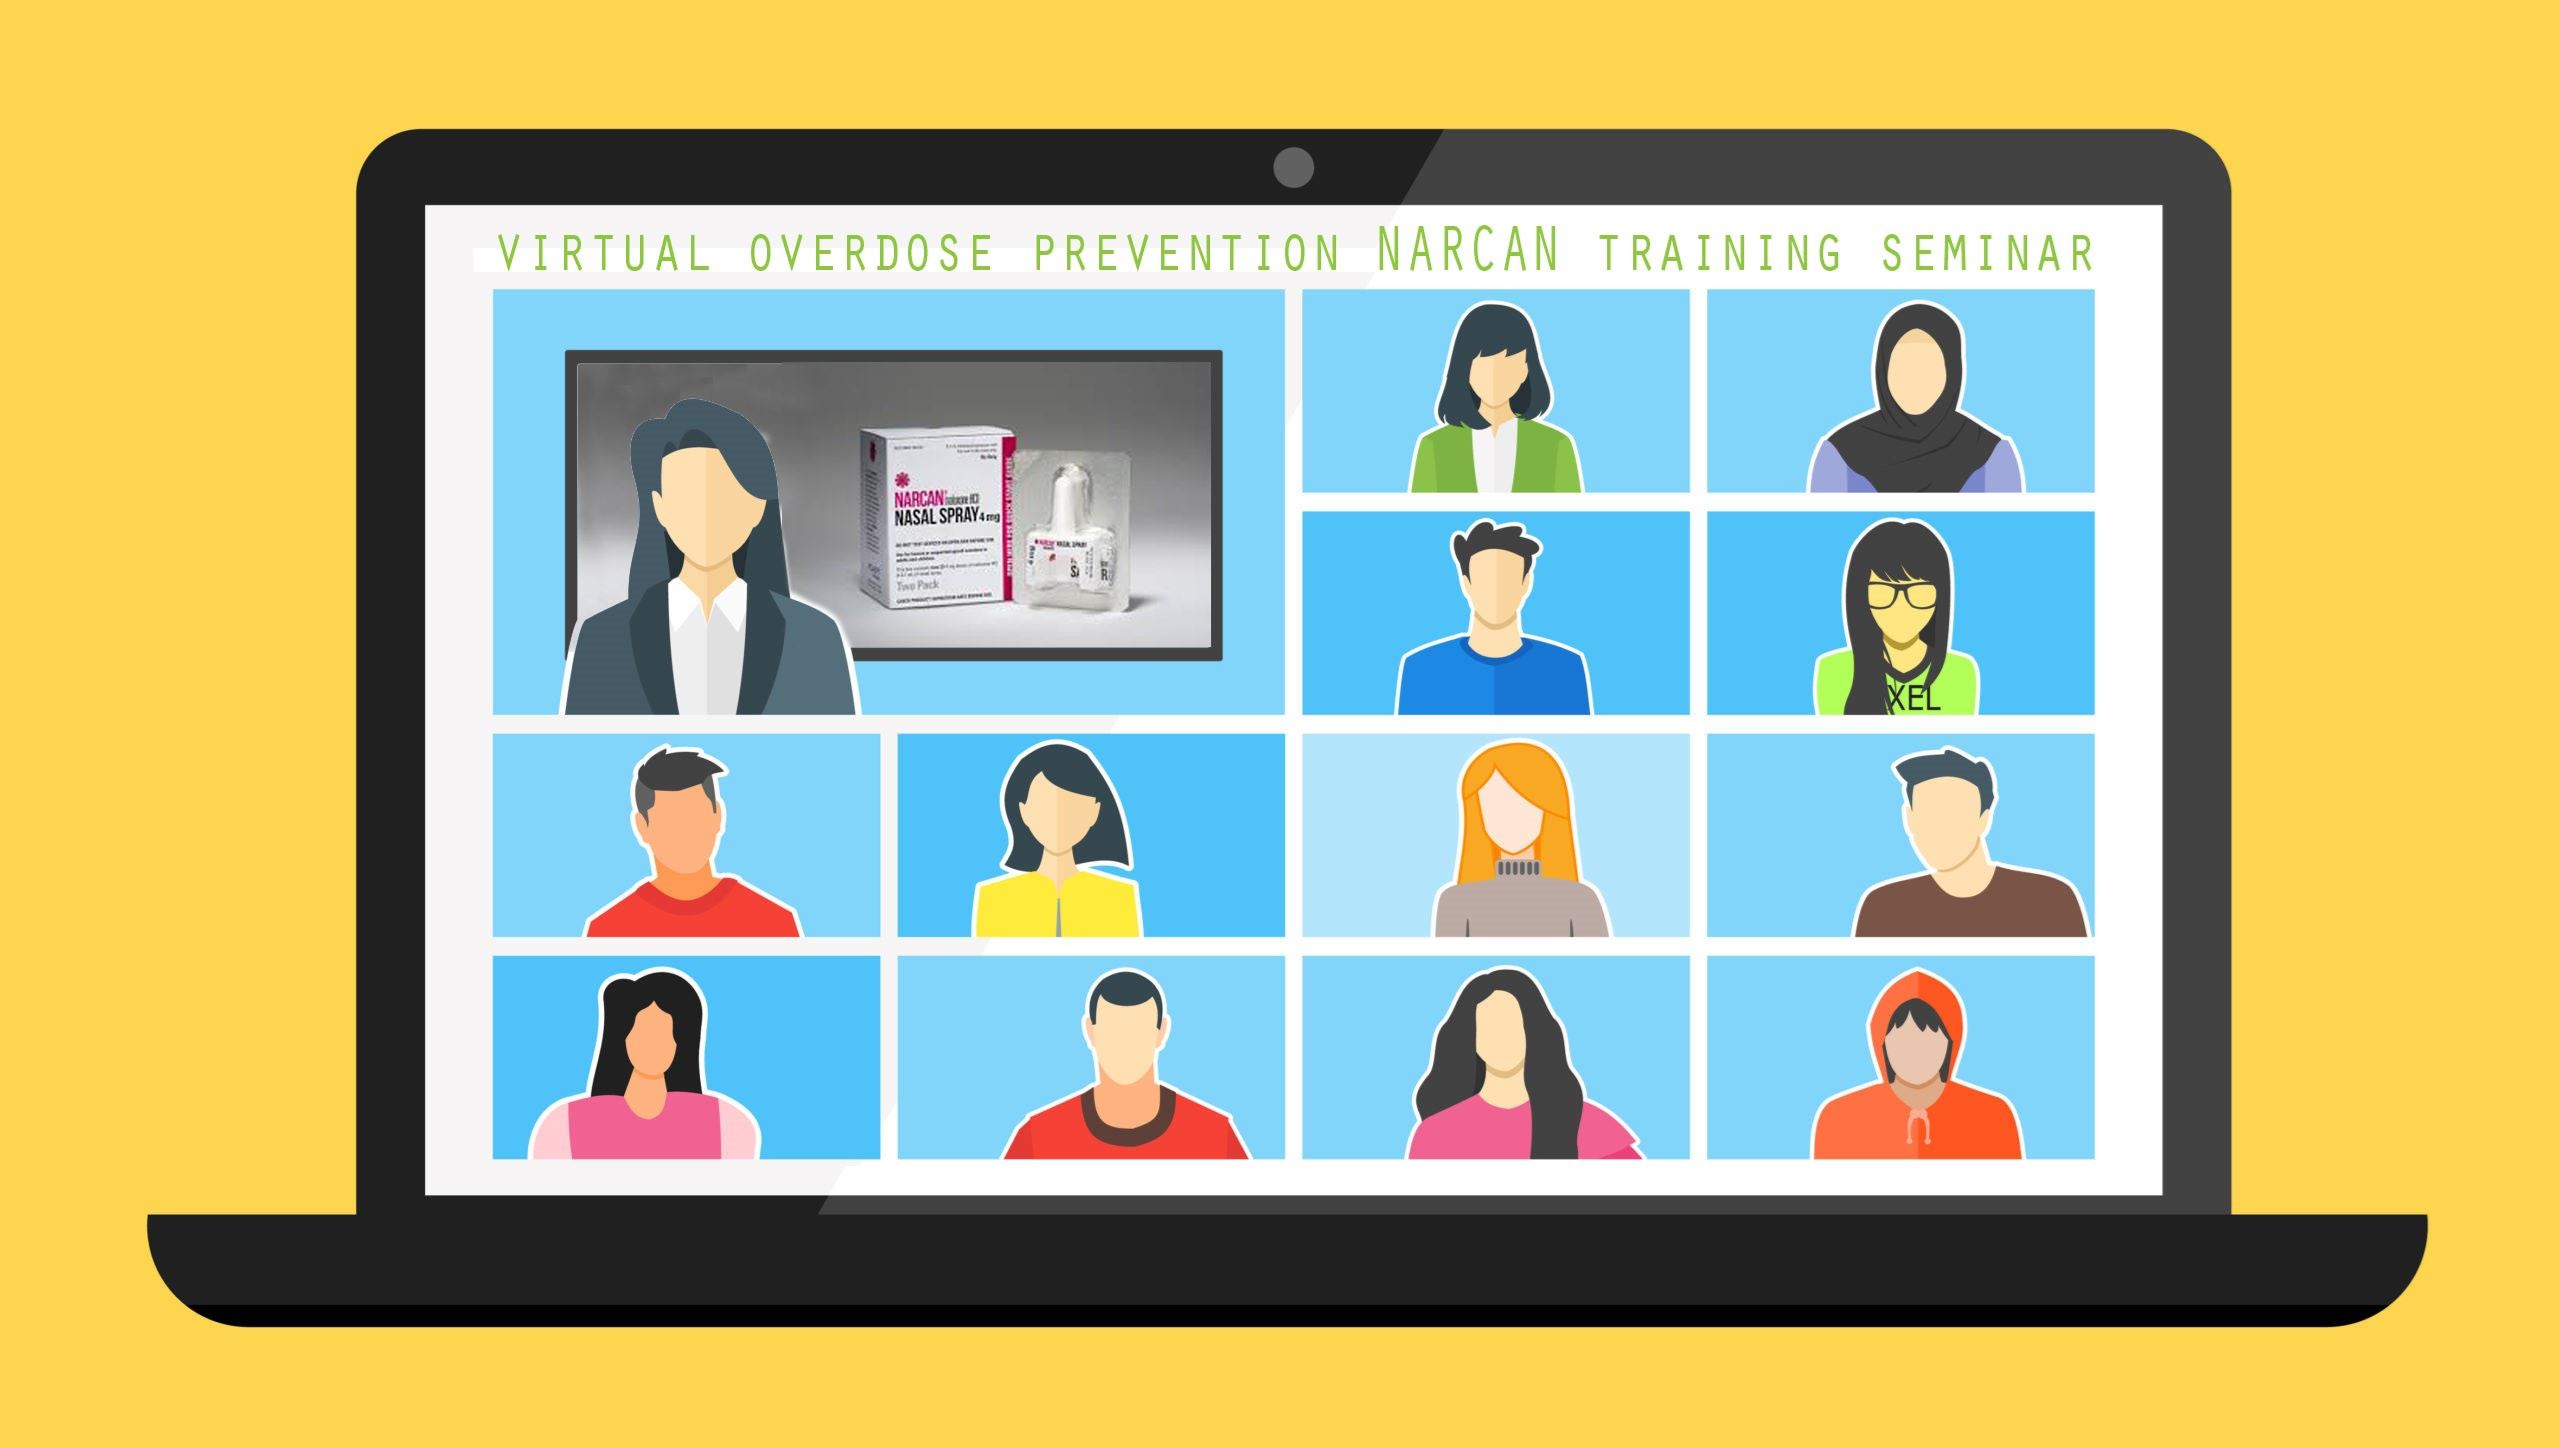 Virtual overdose prevention seminar with naloxone-narcan training